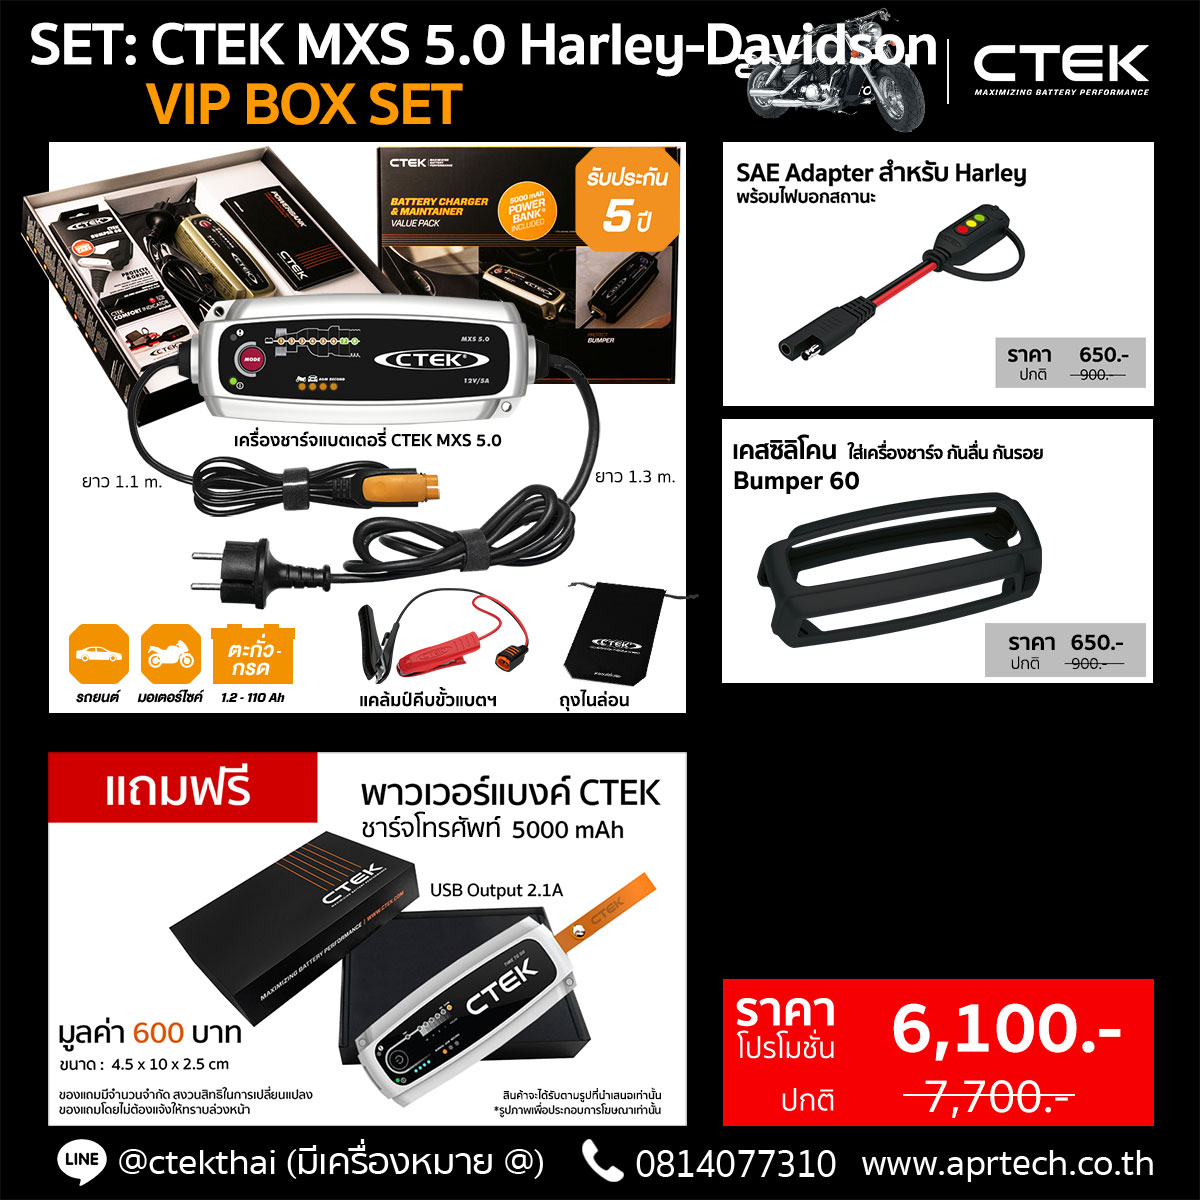 SET MXS 5.0 Harley-Davidson VIP READY BOX SET (CTEK MXS 5.0 + Indicator Pigtail + Bumper)